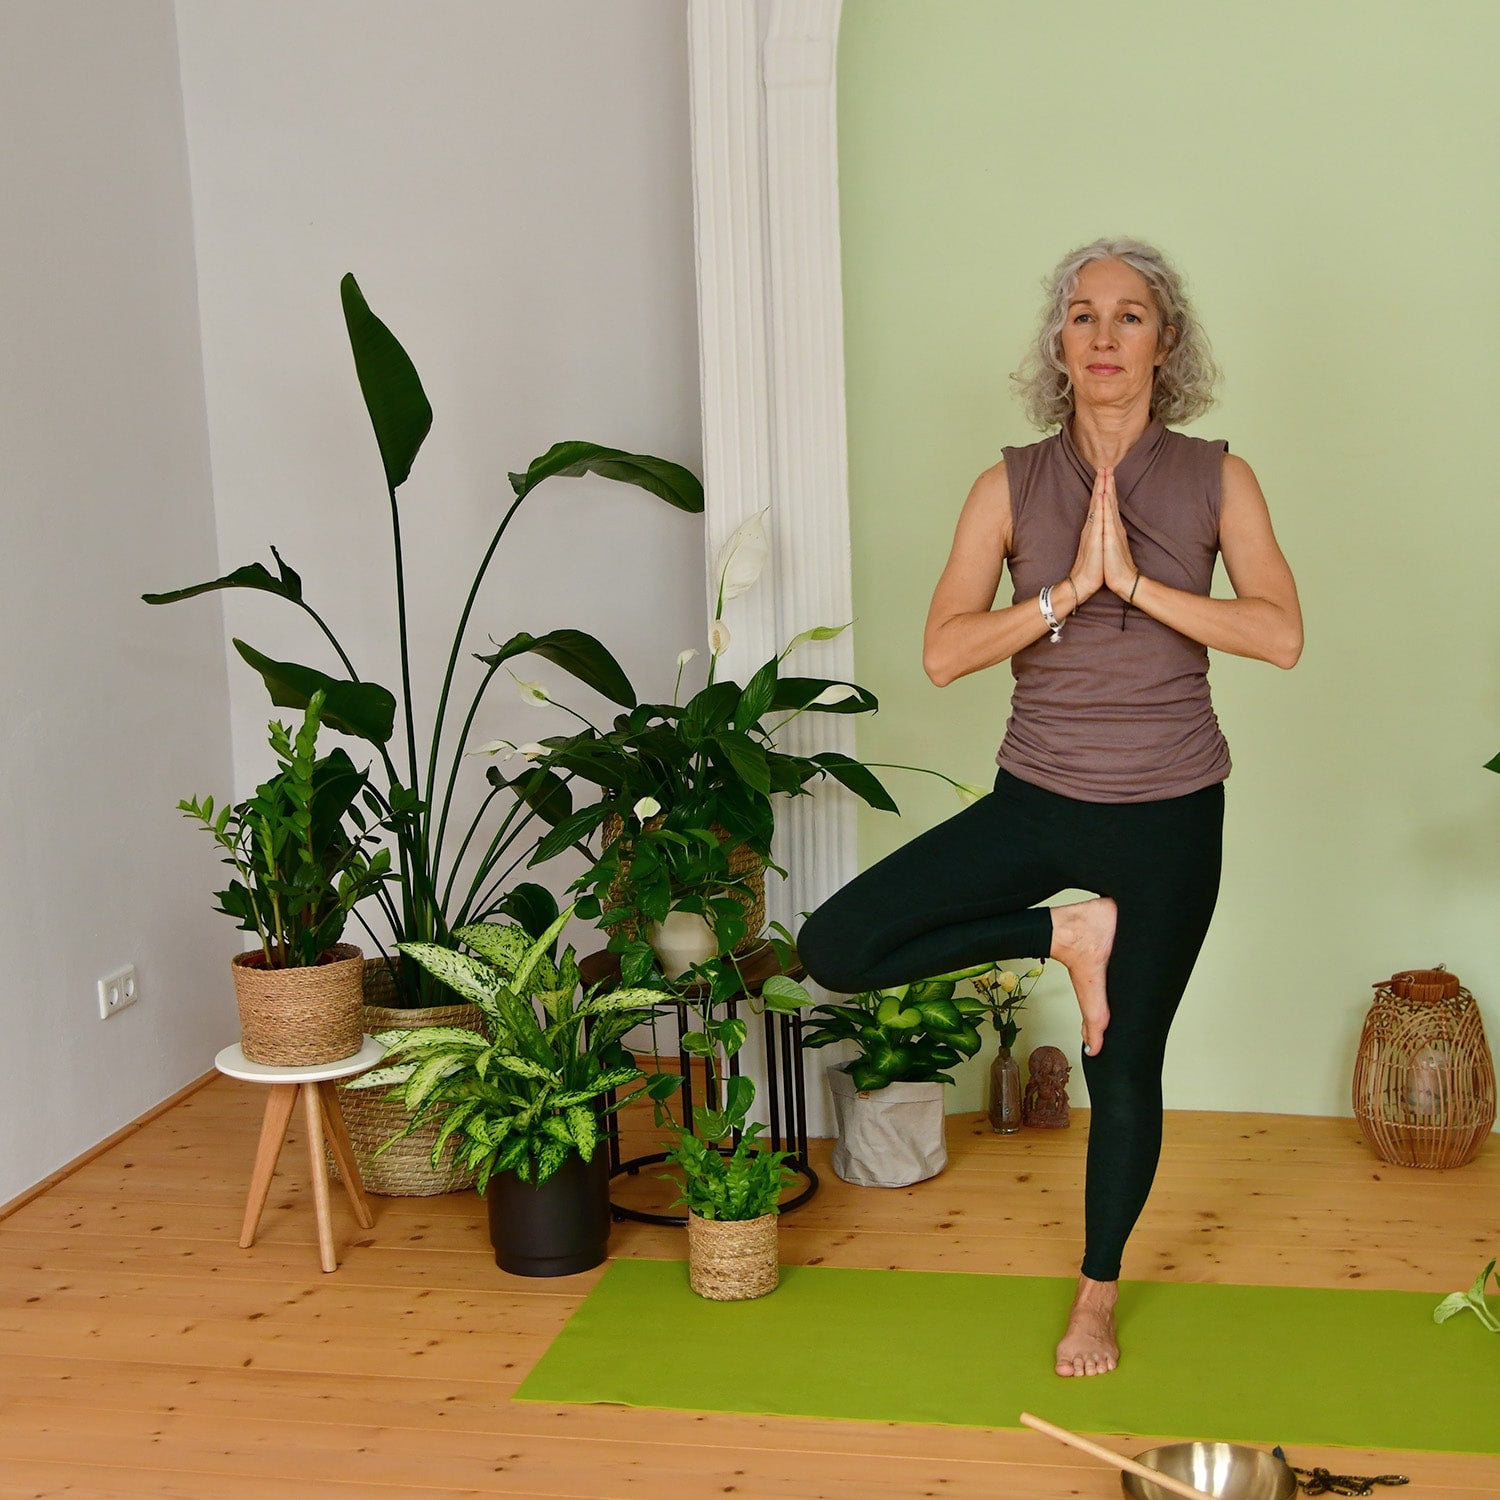 Frau macht Yoga Übung neben Pflanzen